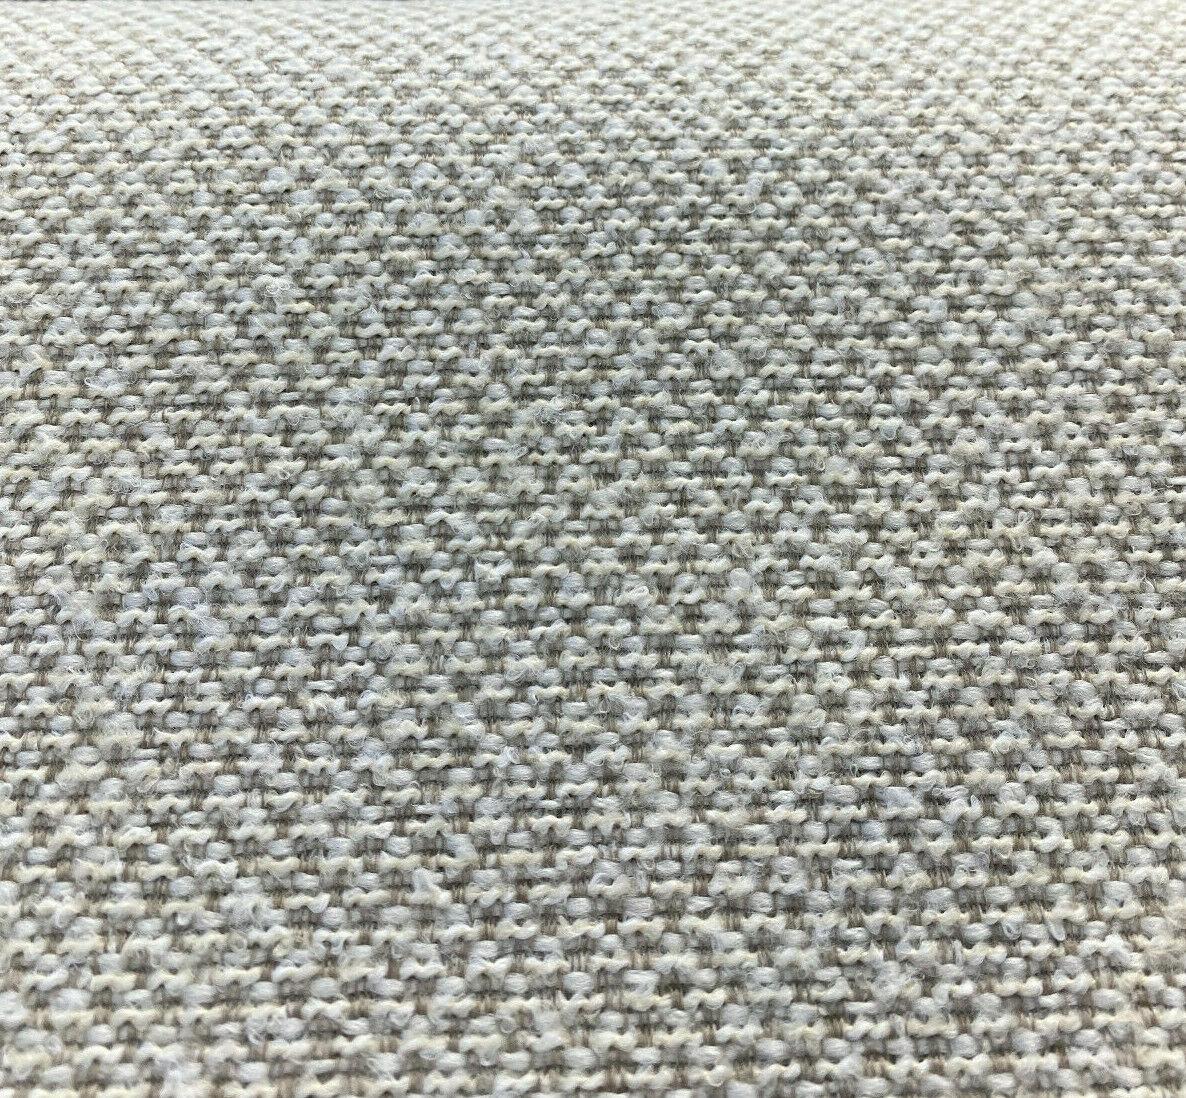 Cream/White Shadow Stripe Upholstery Fabric